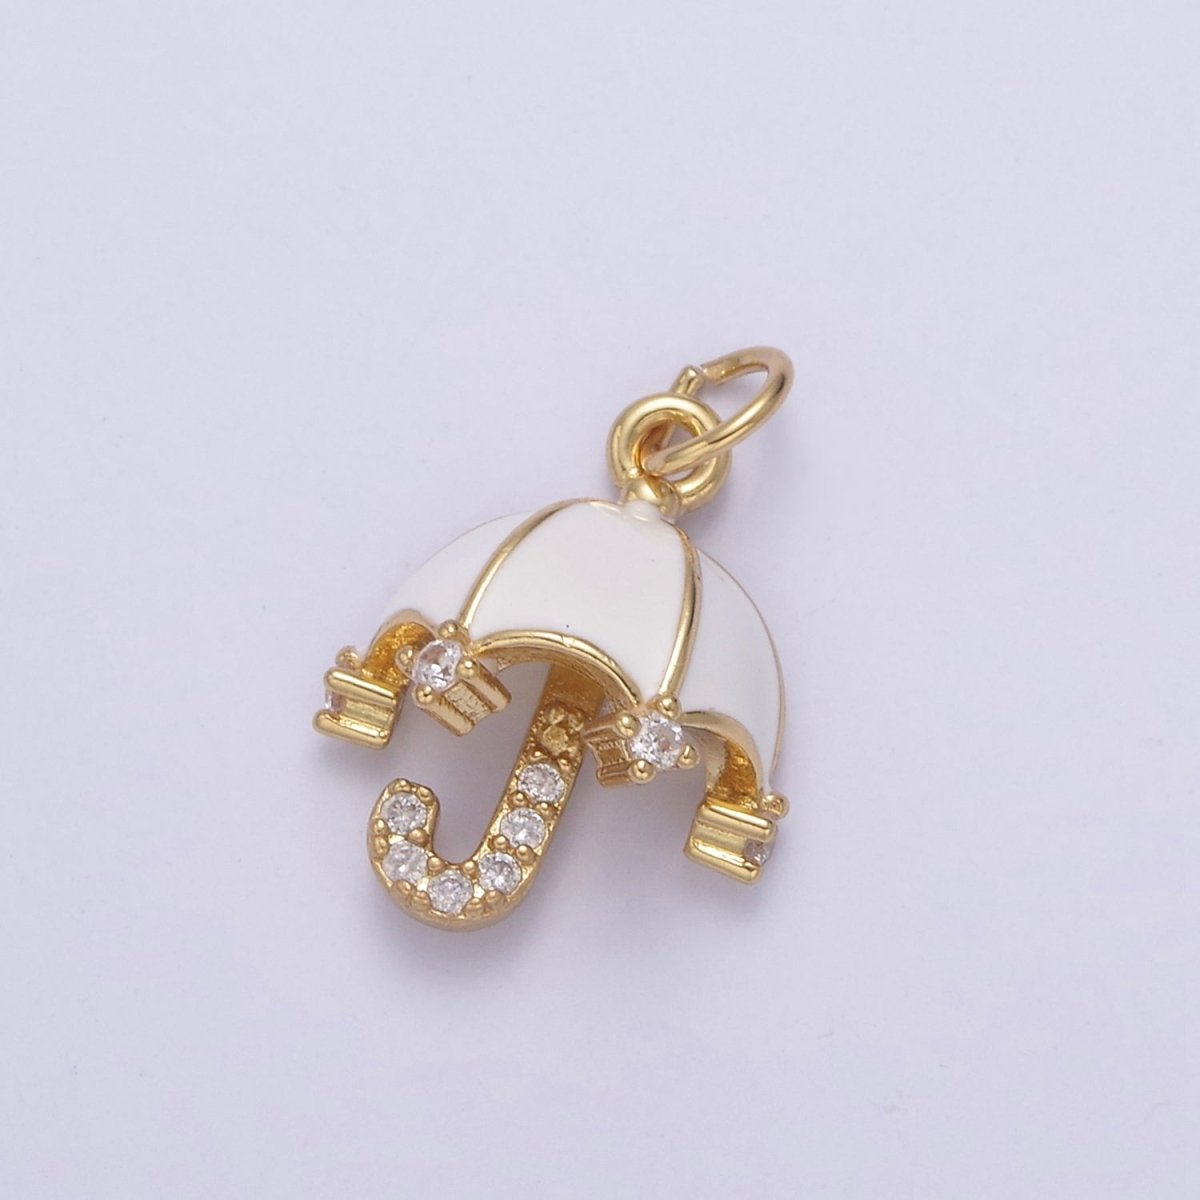 Dainty White Umbrella Charm for Bracelet Necklace Earring Supply N-750 - DLUXCA